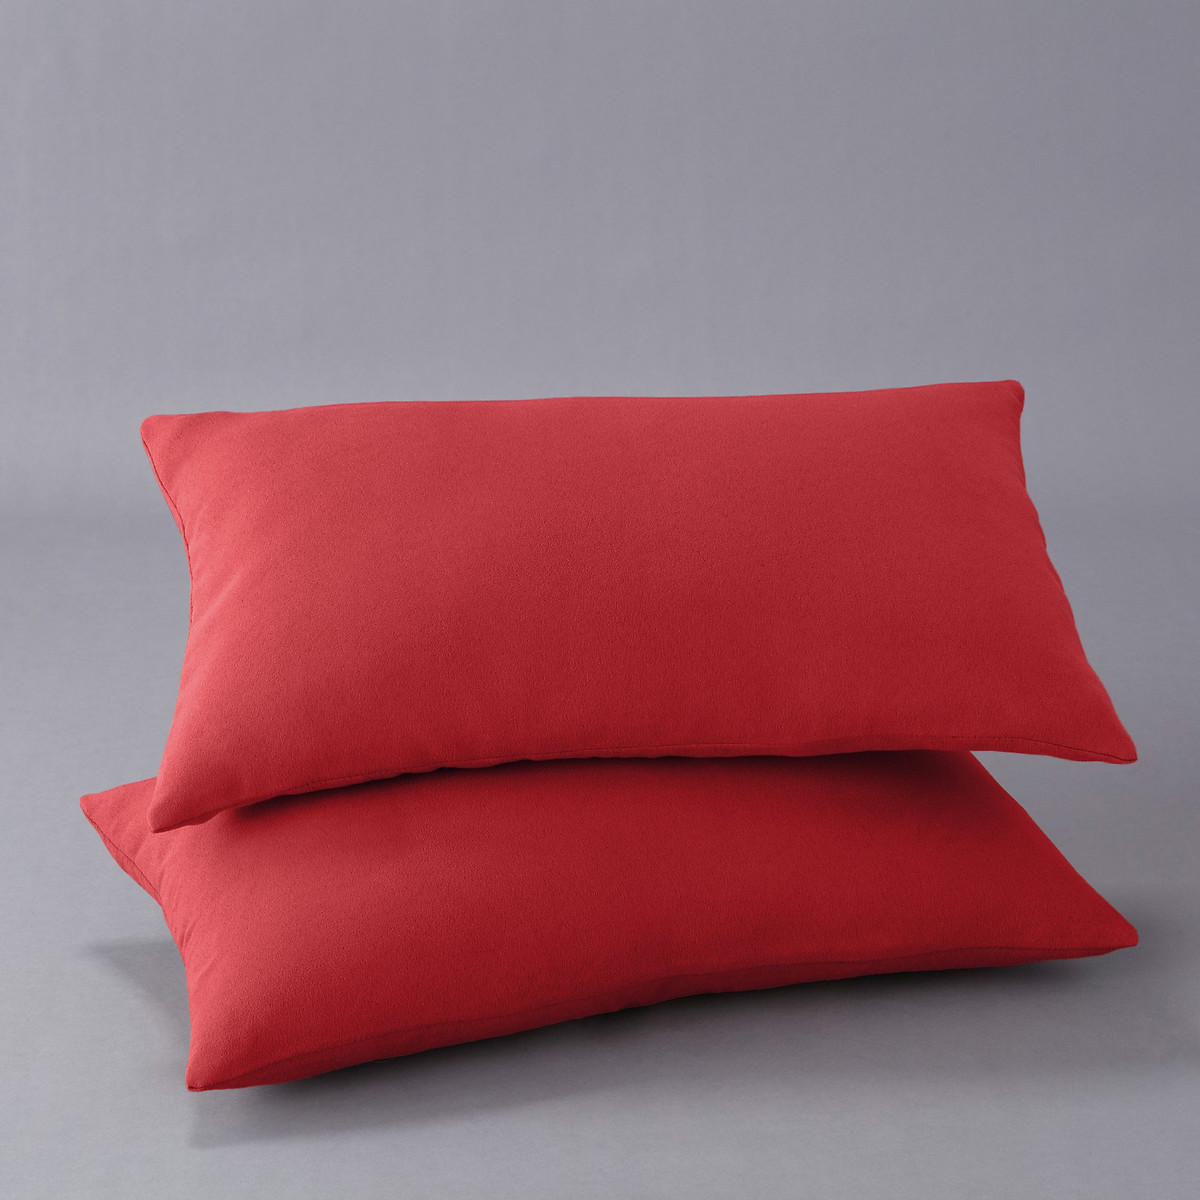 Чехла La Redoute На подушку 50 x 30 см красный, размер 50 x 30 см - фото 1